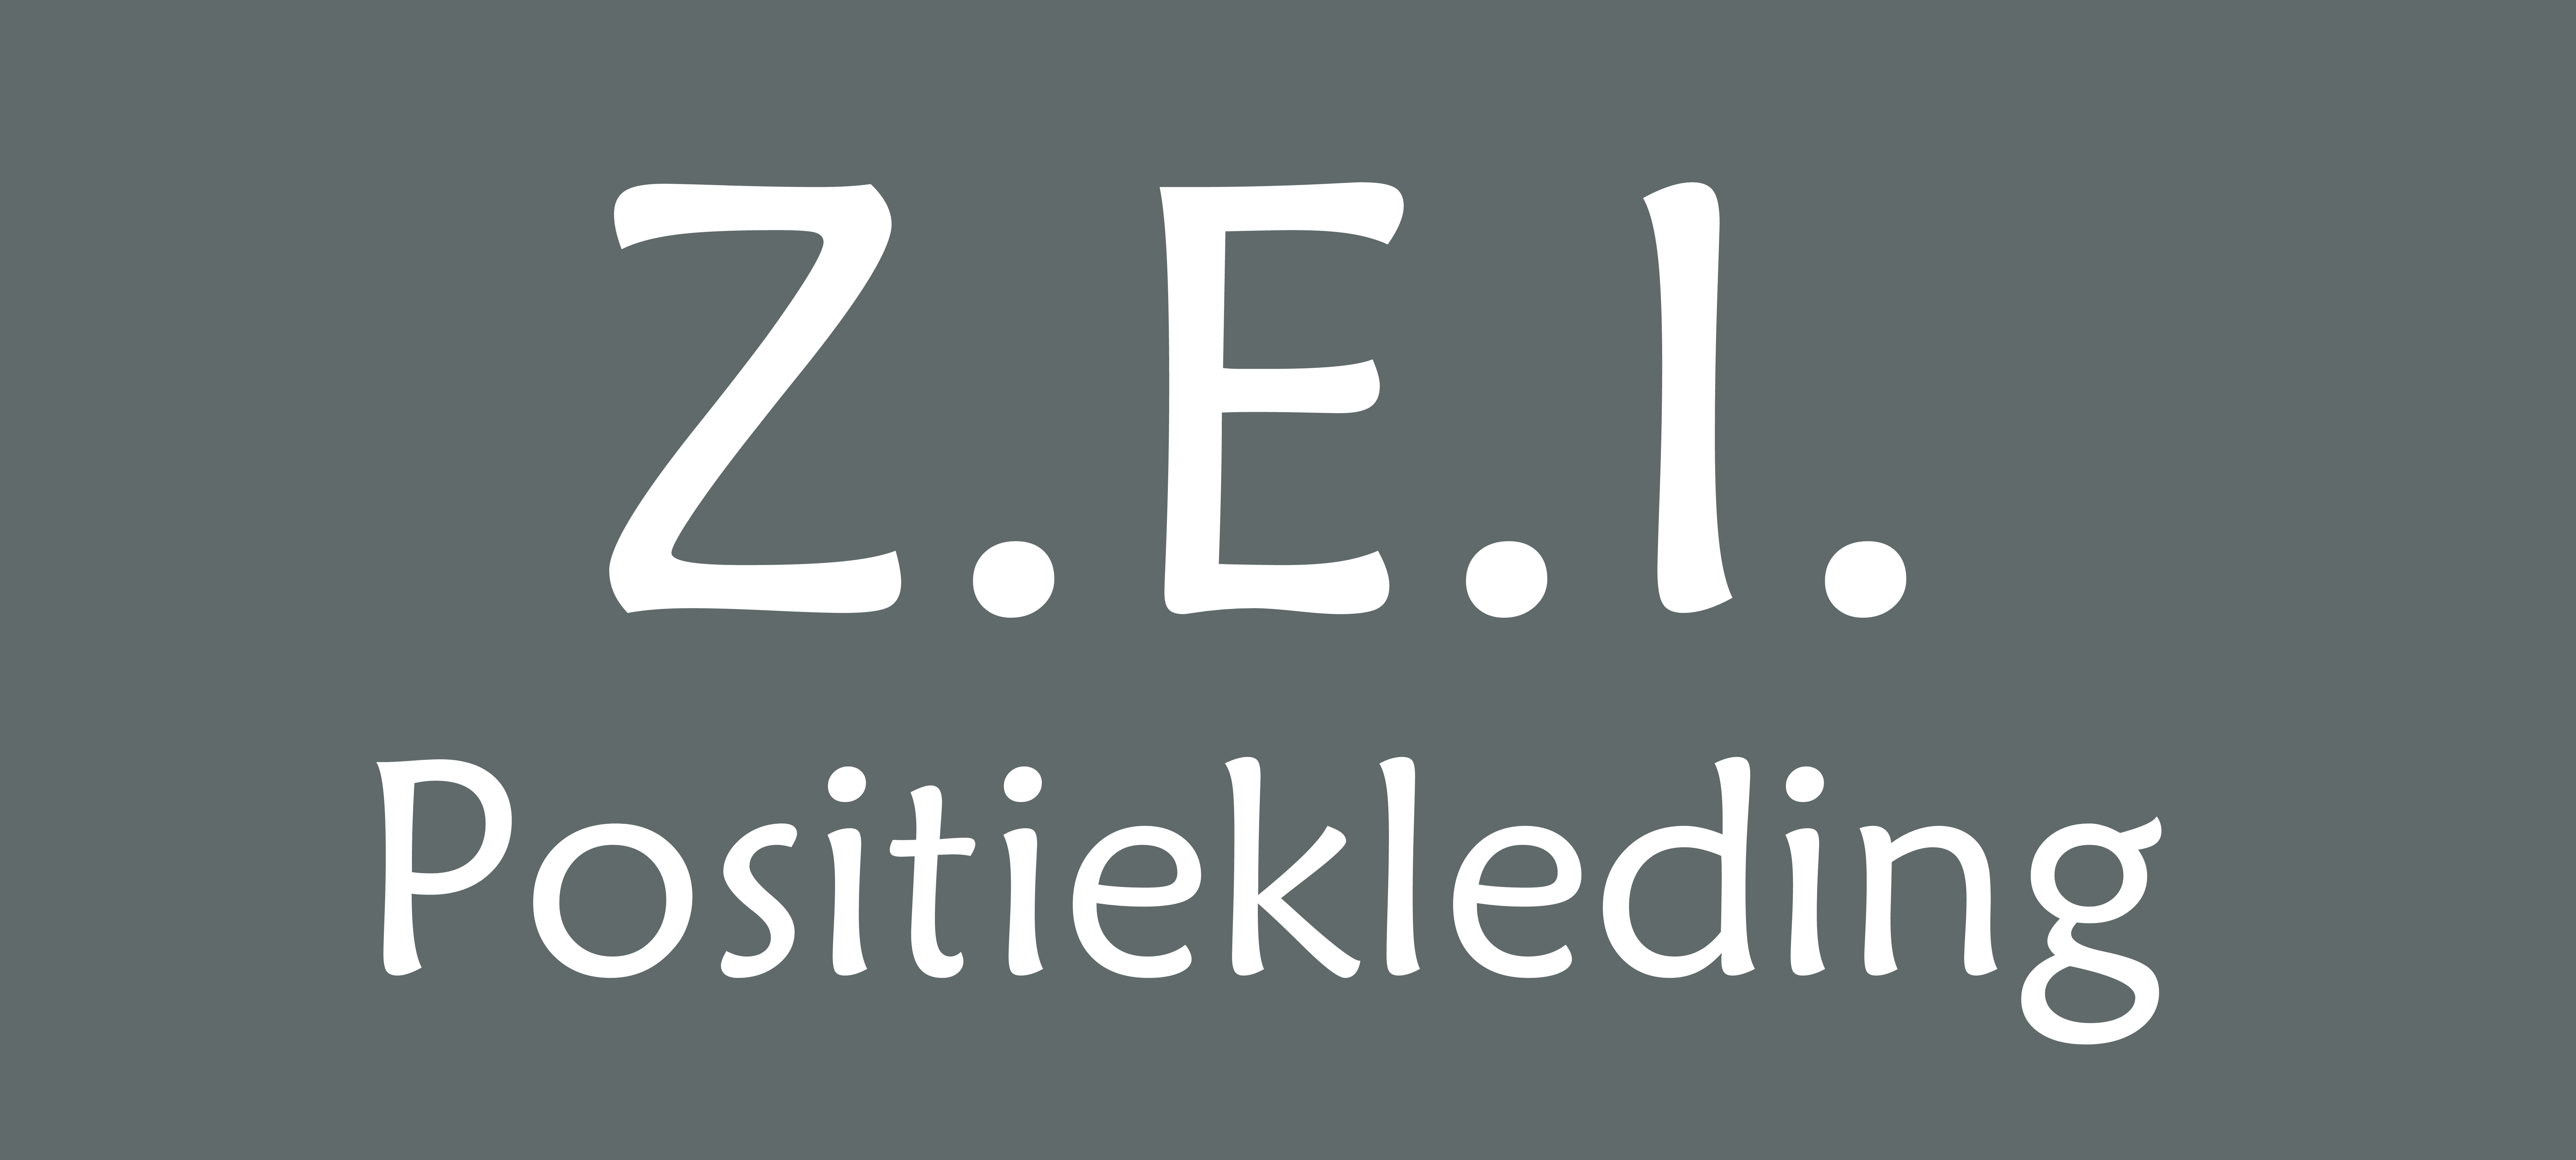 www.zeipositiekleding.nl